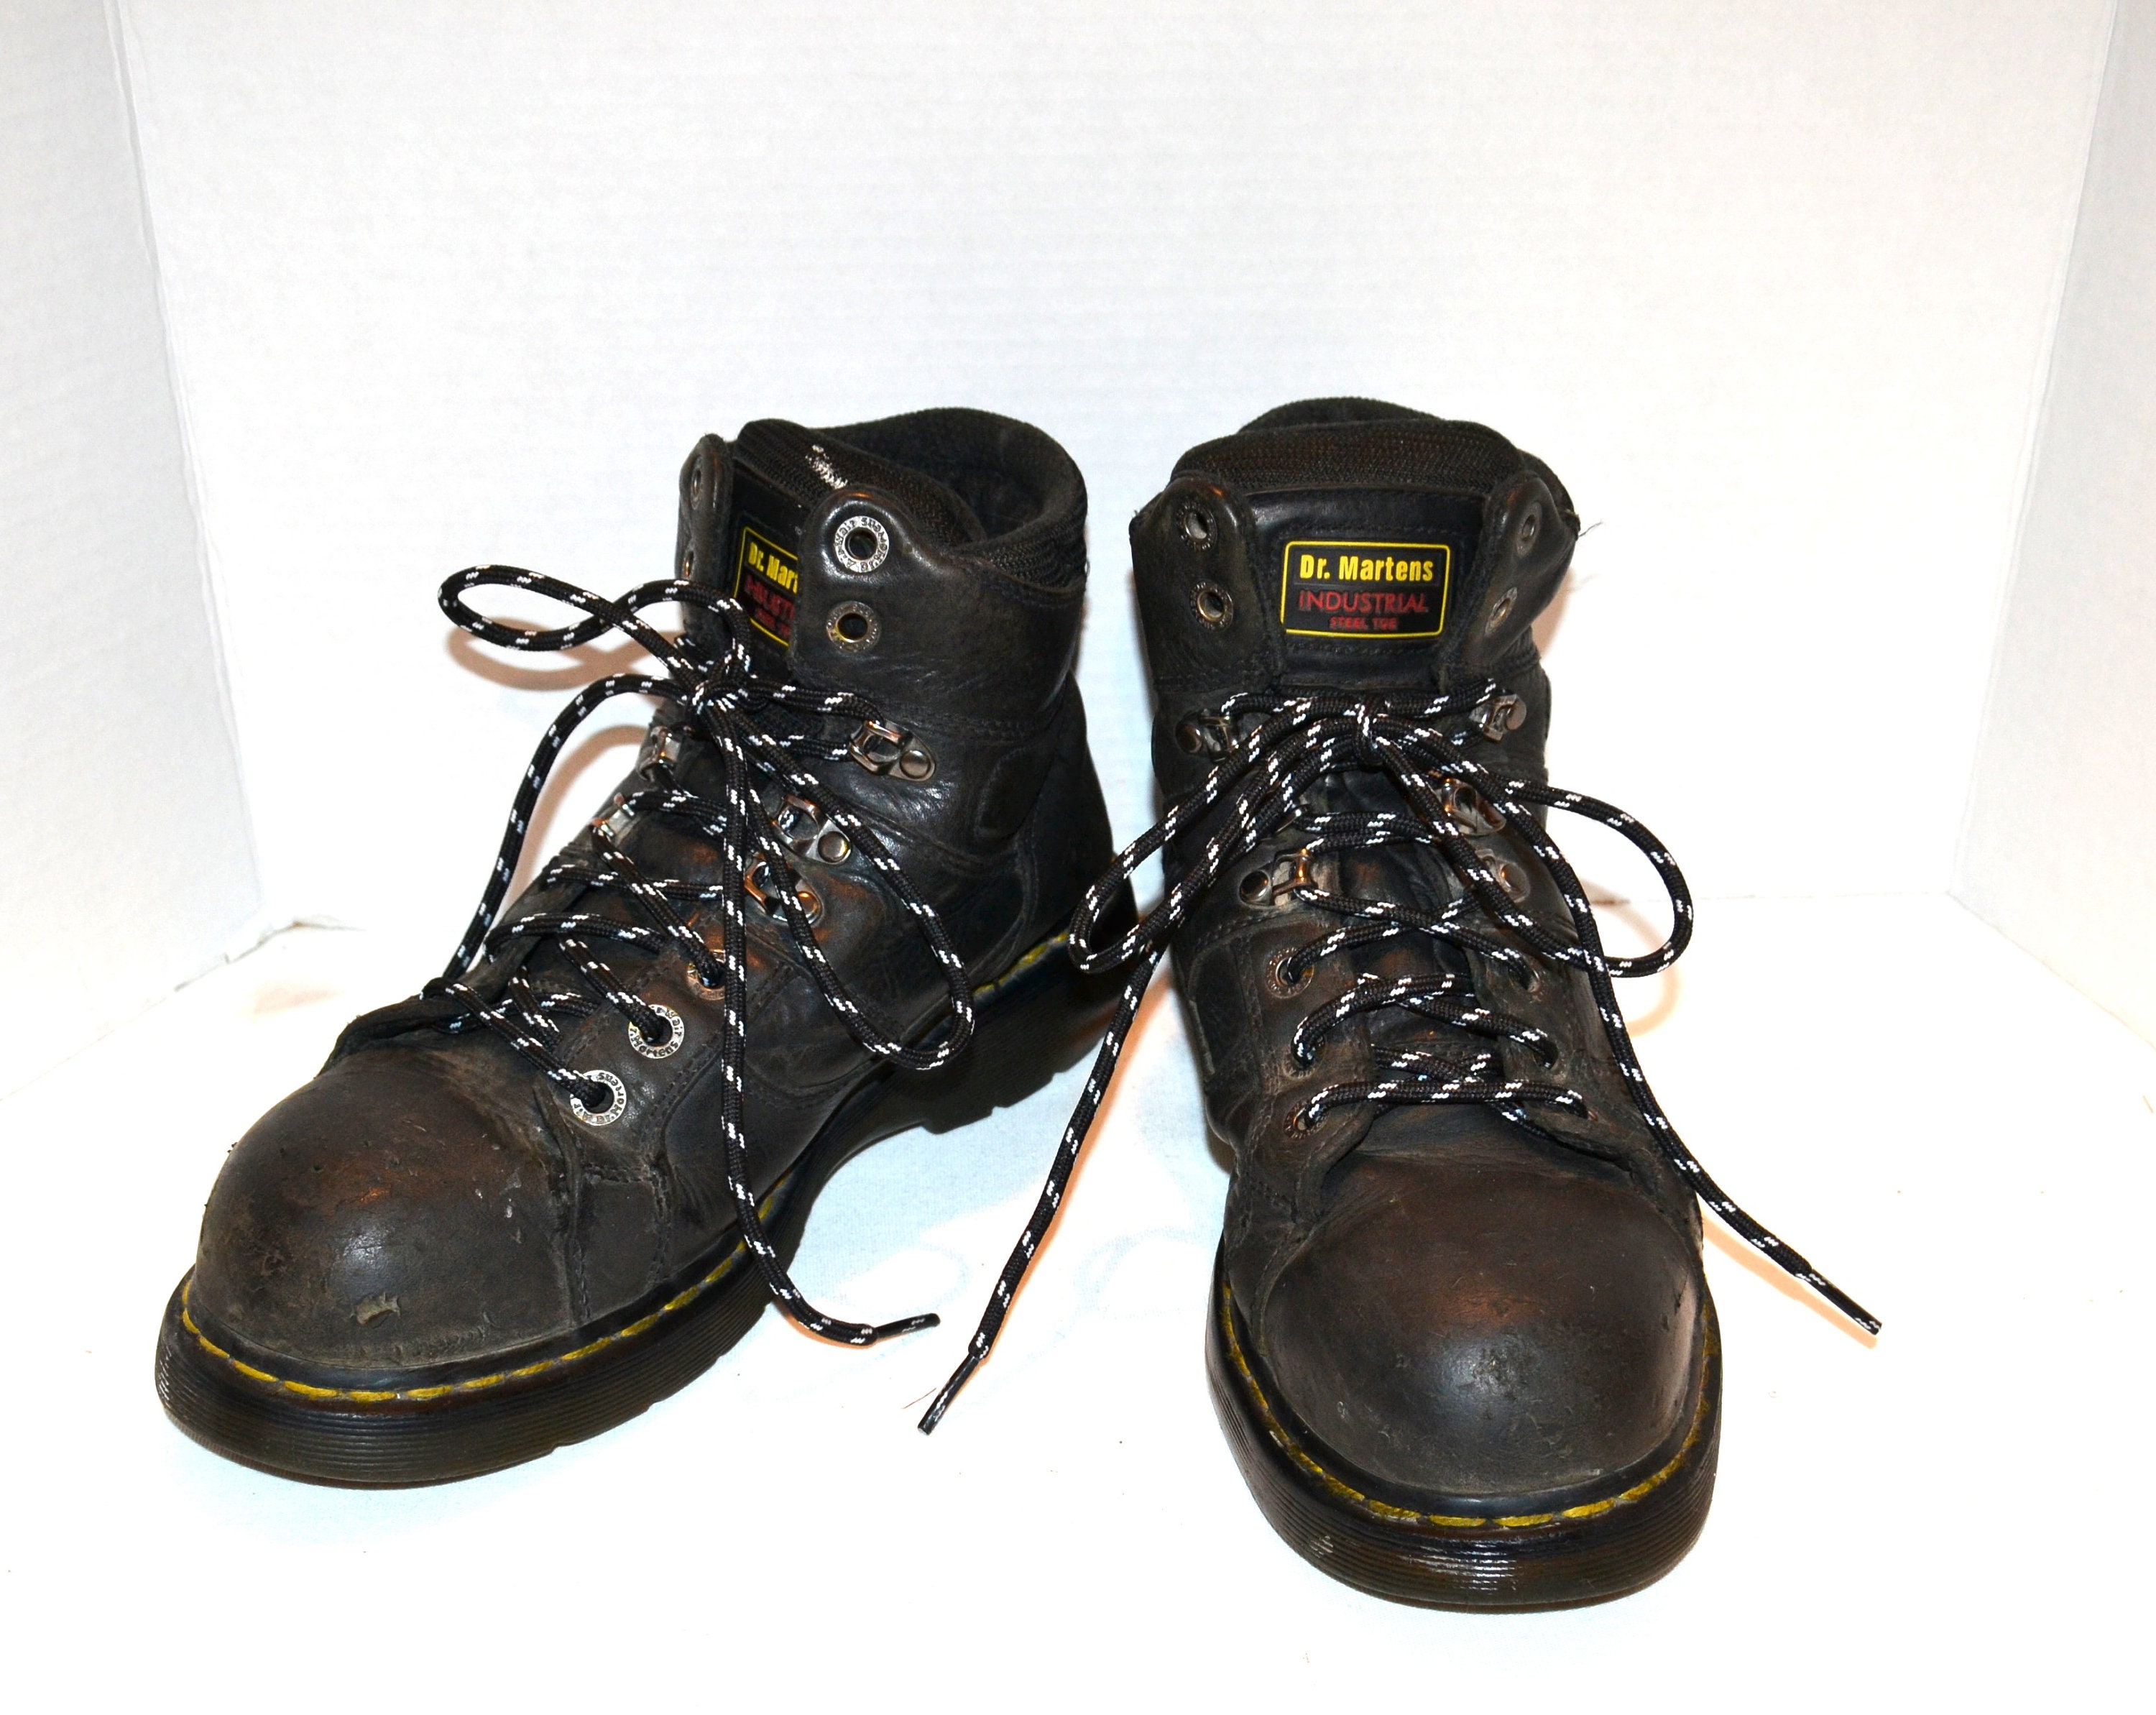 SALE Boots Martens Chugga Work Steel Toe Black - Etsy